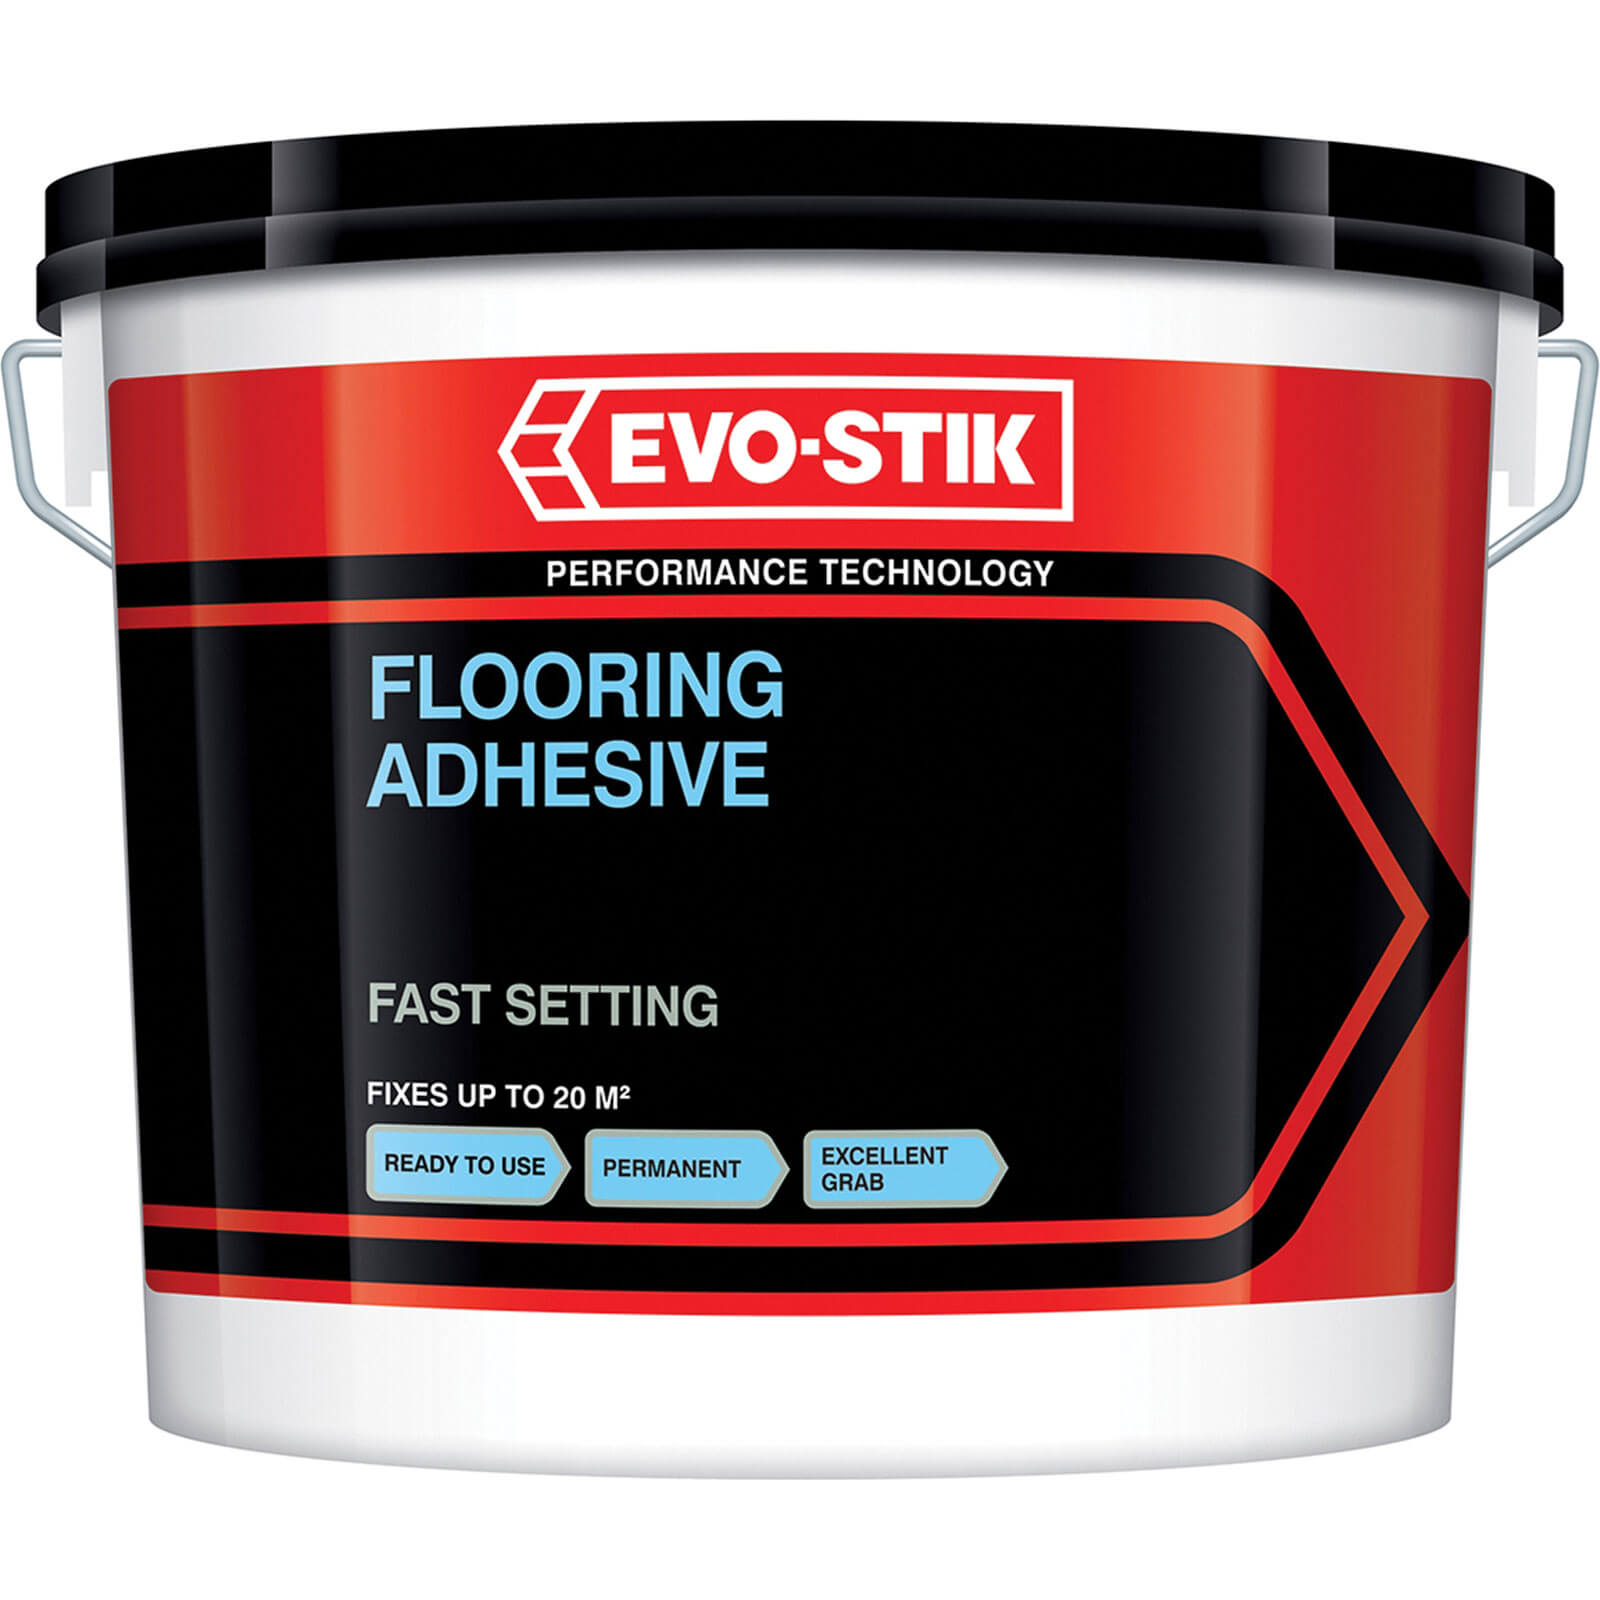 Photo of Evo-stik 873 Flooring Adhesive 2.5l